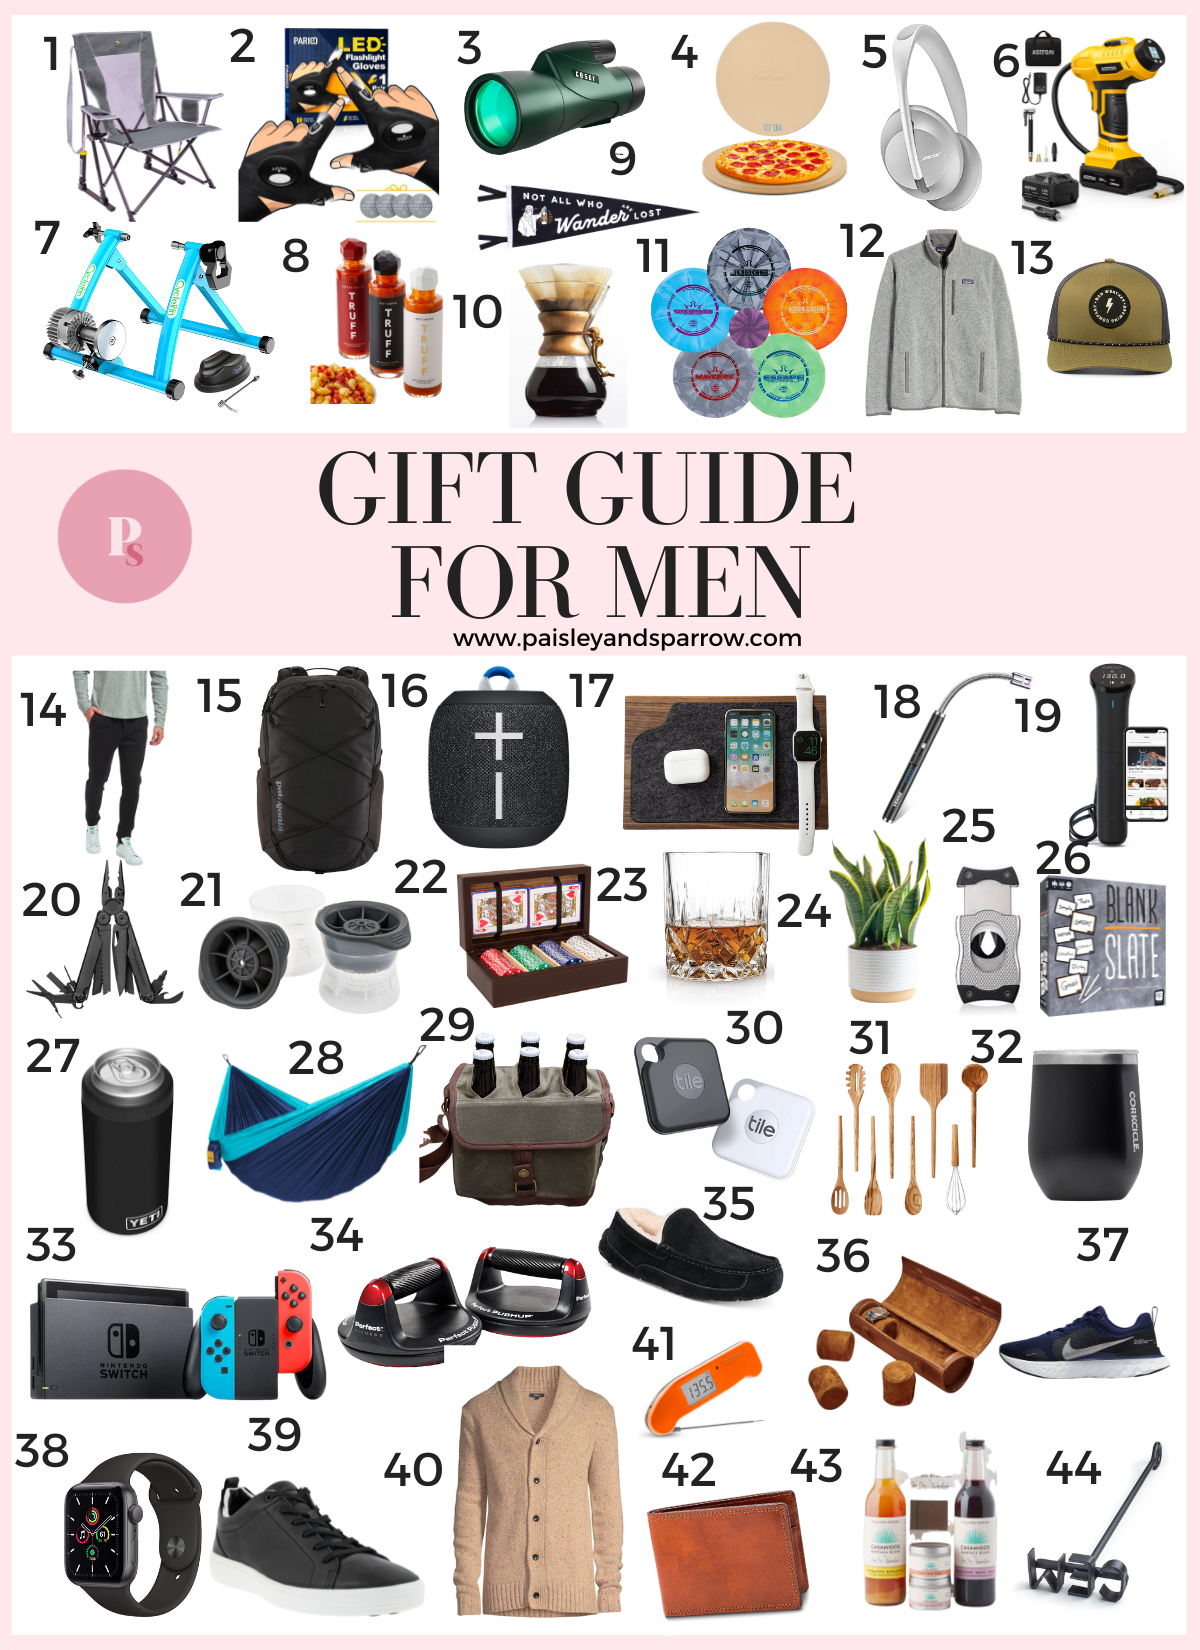 Online Gifts for Men | Best Gift ideas for Him - FNP